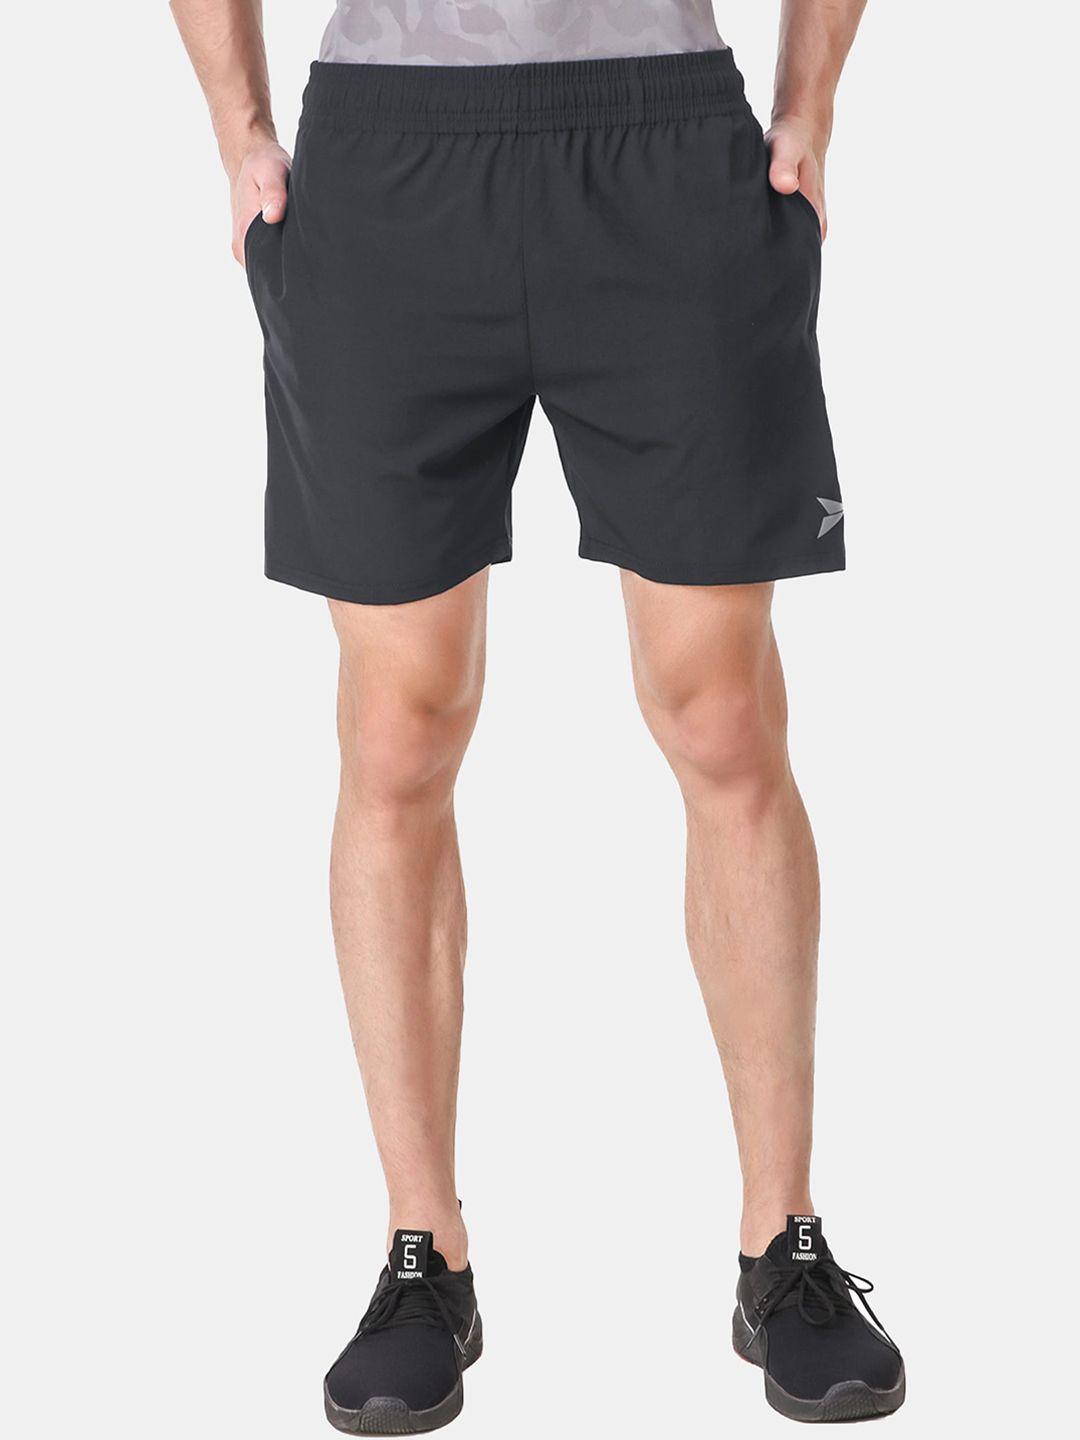 fitinc men grey slim fit running sports shorts